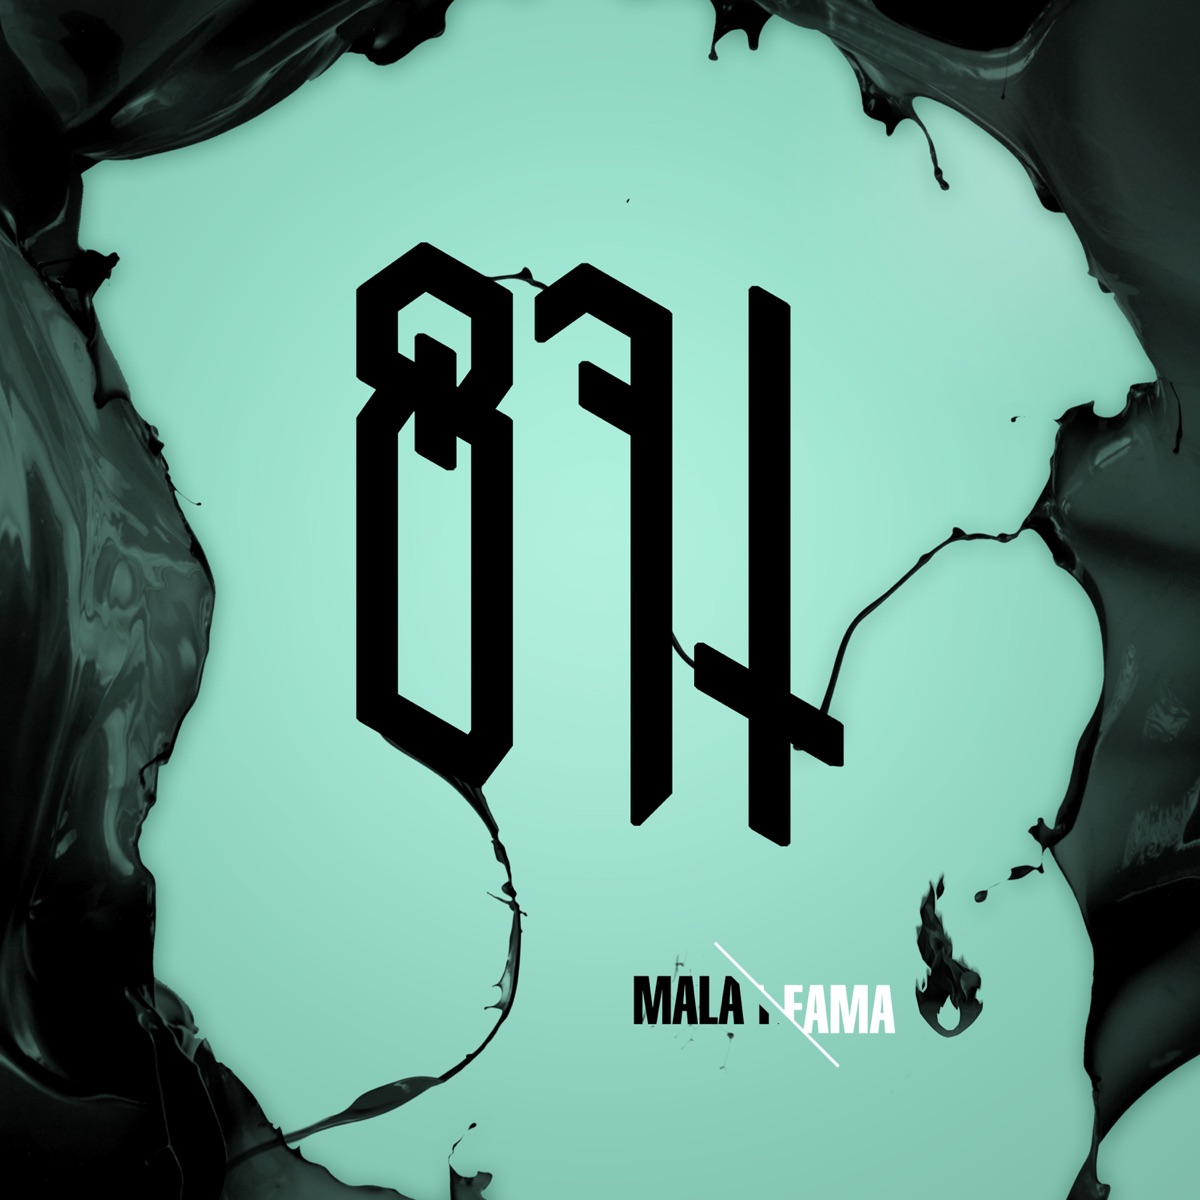 Mala Fama - Album by 871 Crew - Apple Music